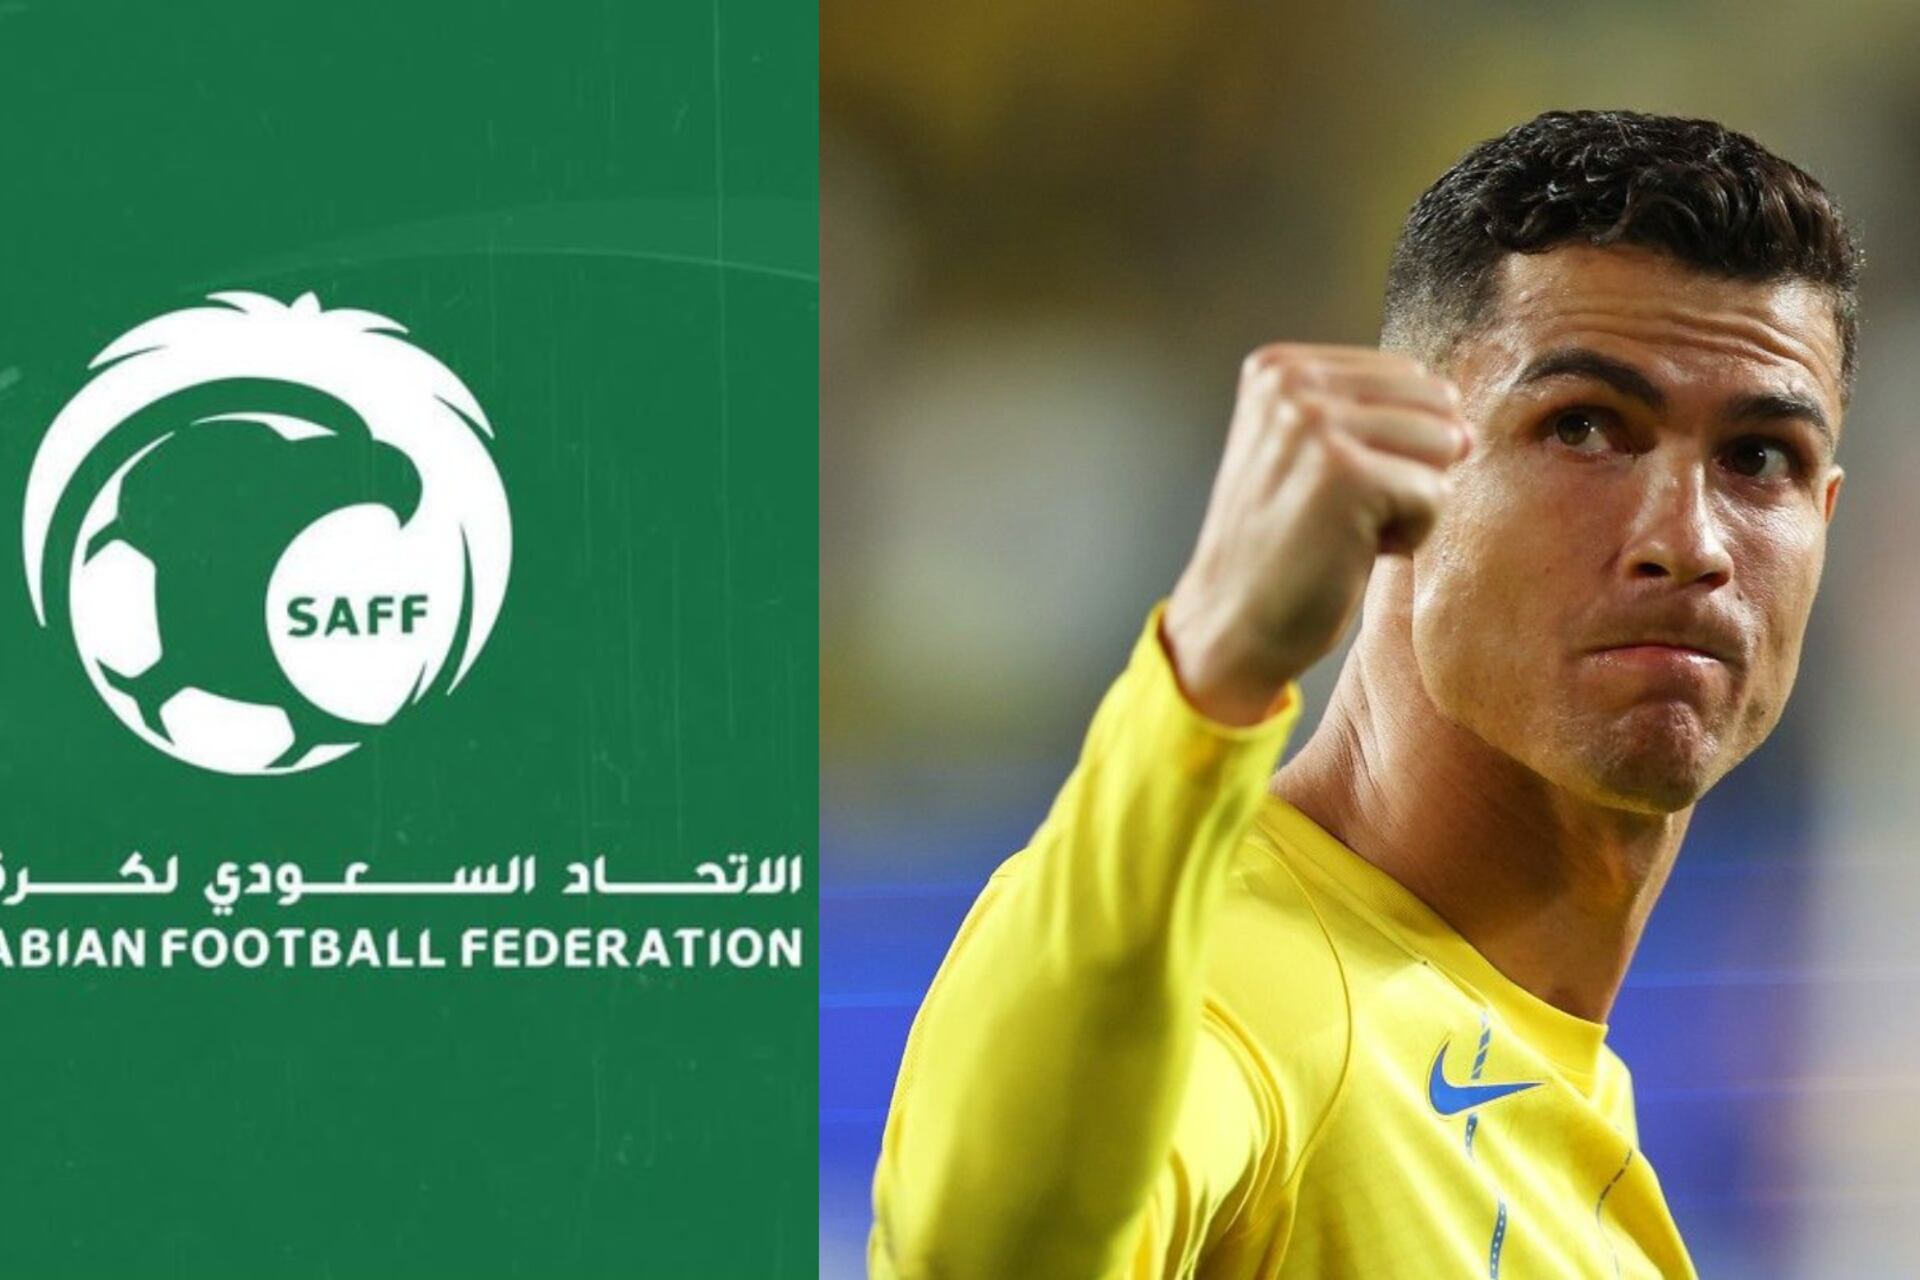 Cristiano Ronaldo always wins, the news he got after his Saudi League sanction